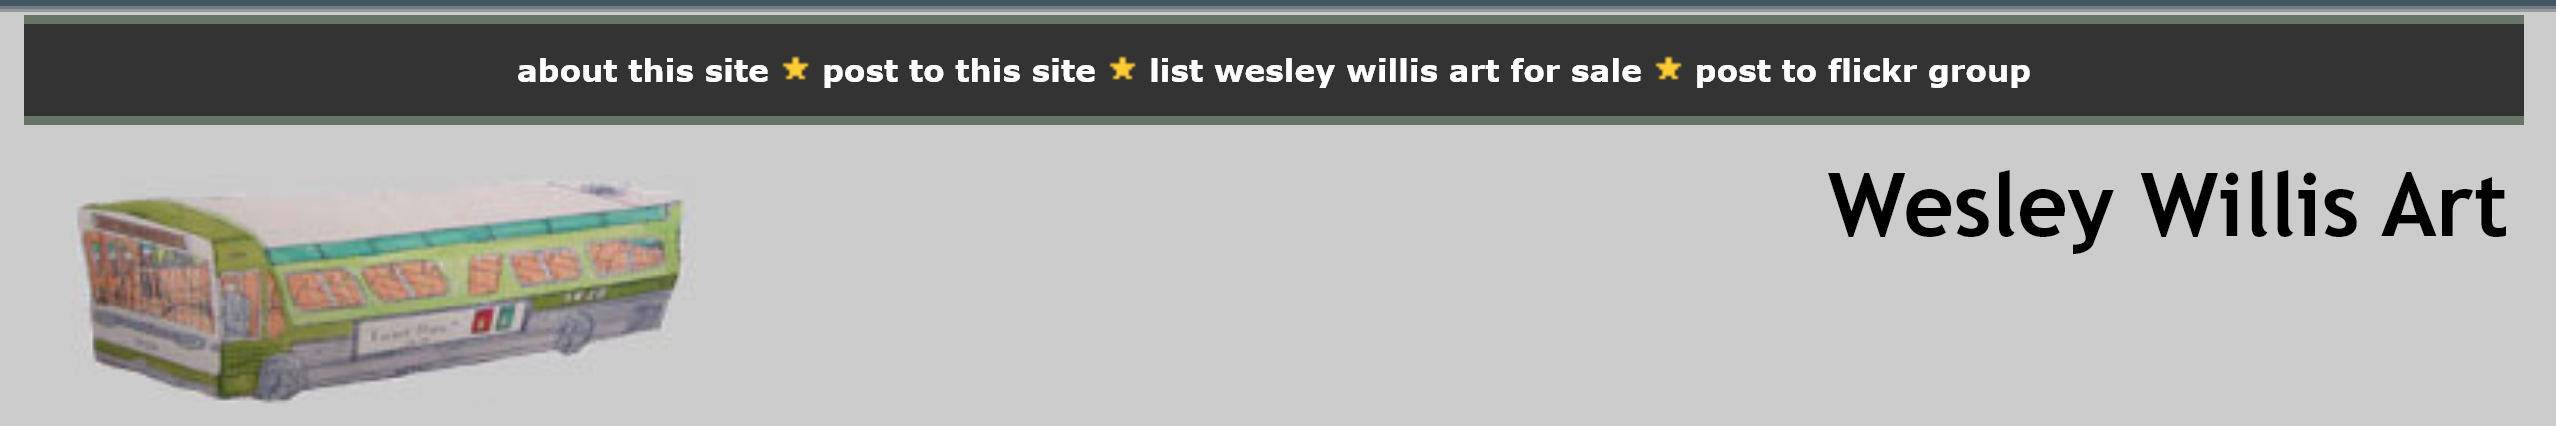 Wesley Willis Art Dot Com